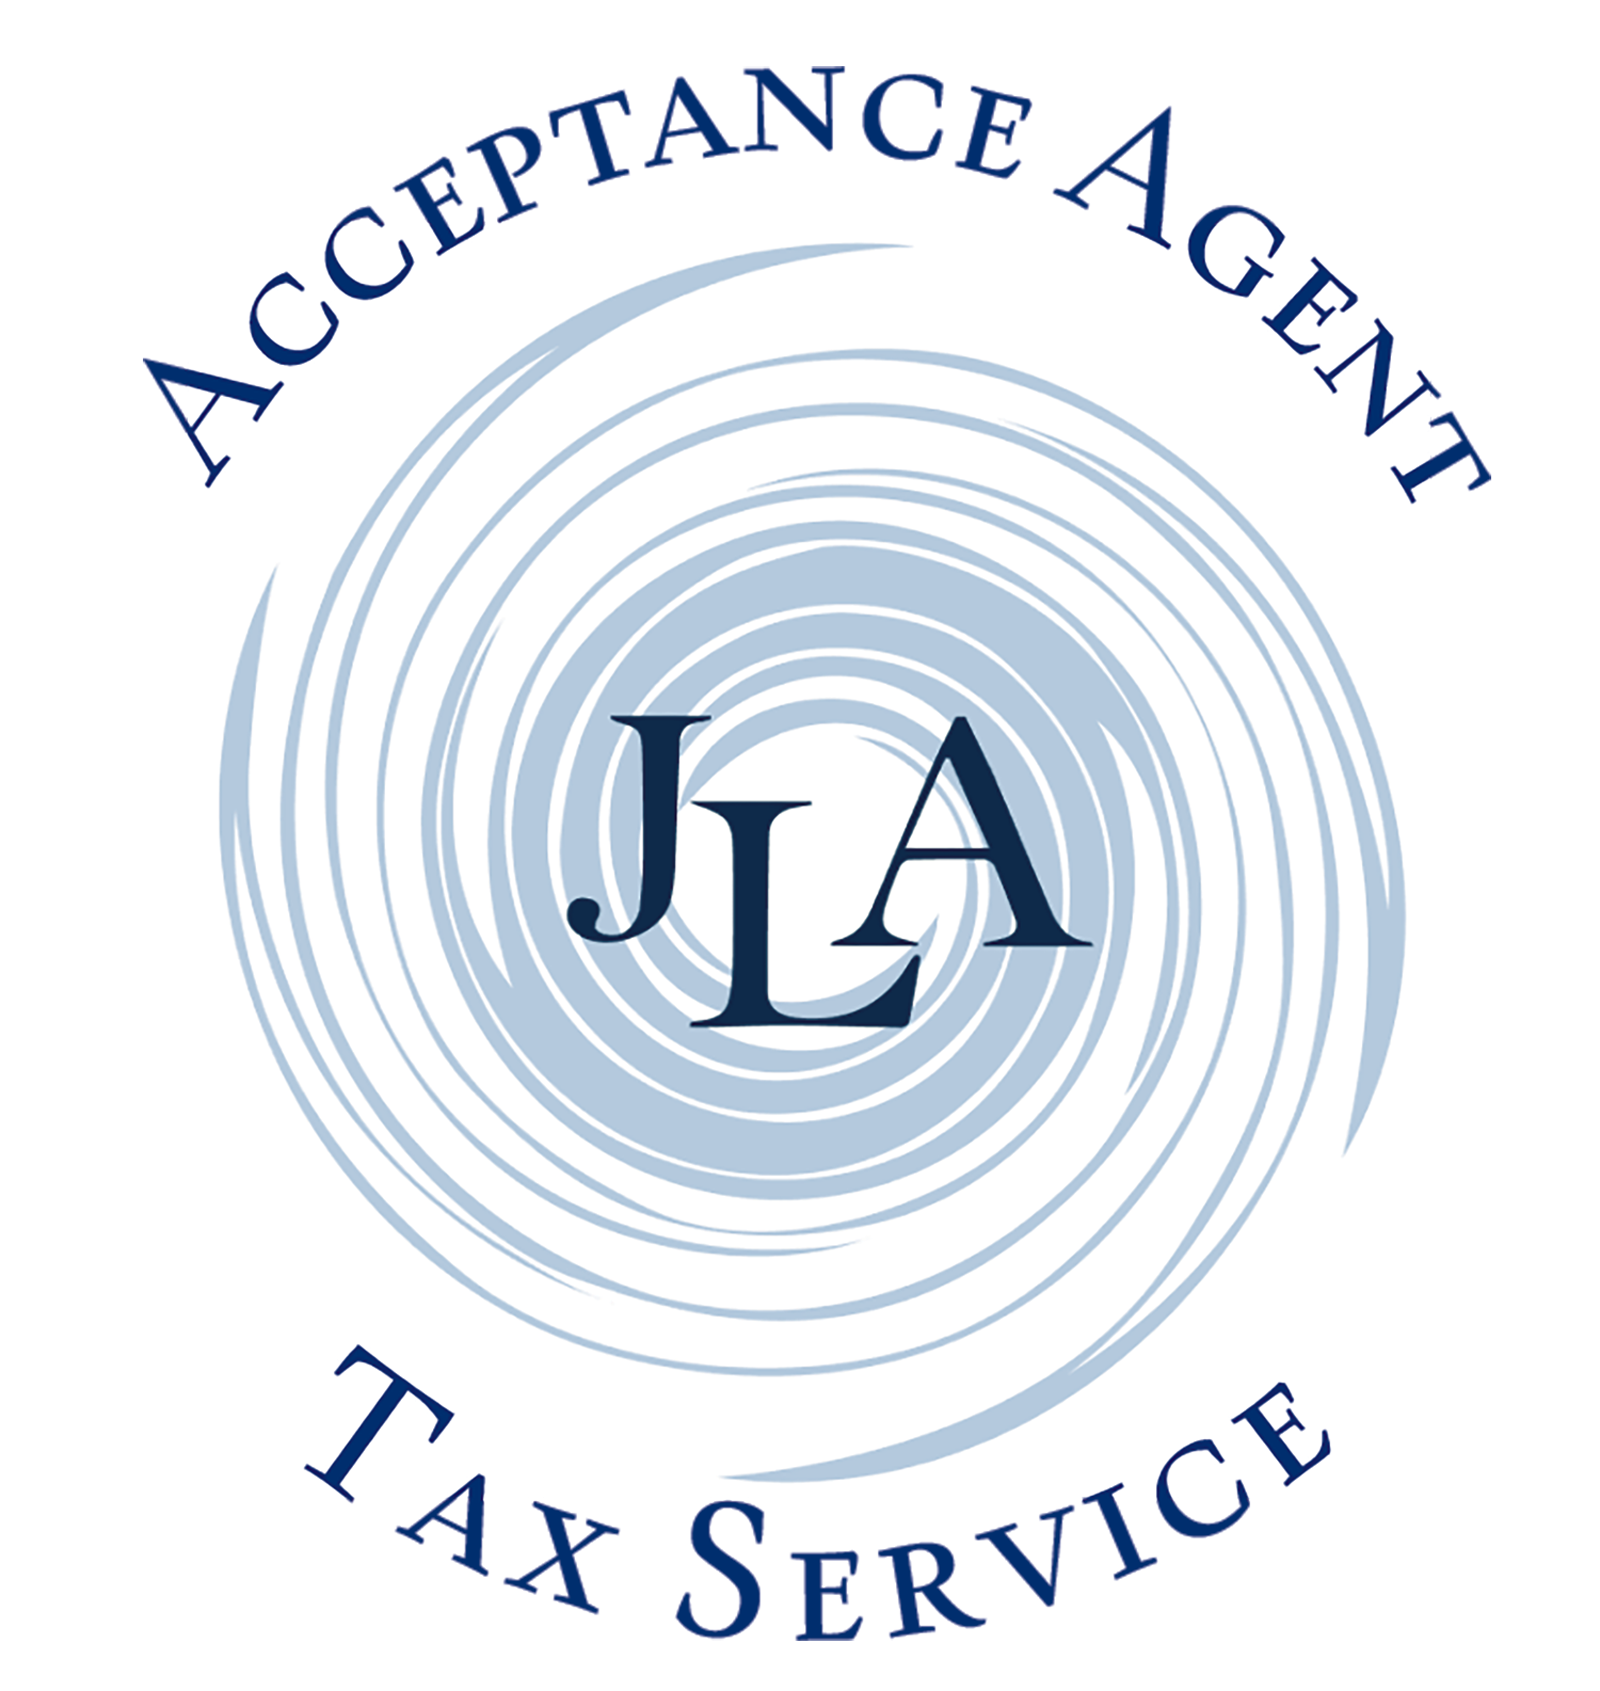 JAMES LAWRENCE ASSOCIATES, LLC. TAX SERVICE logo image